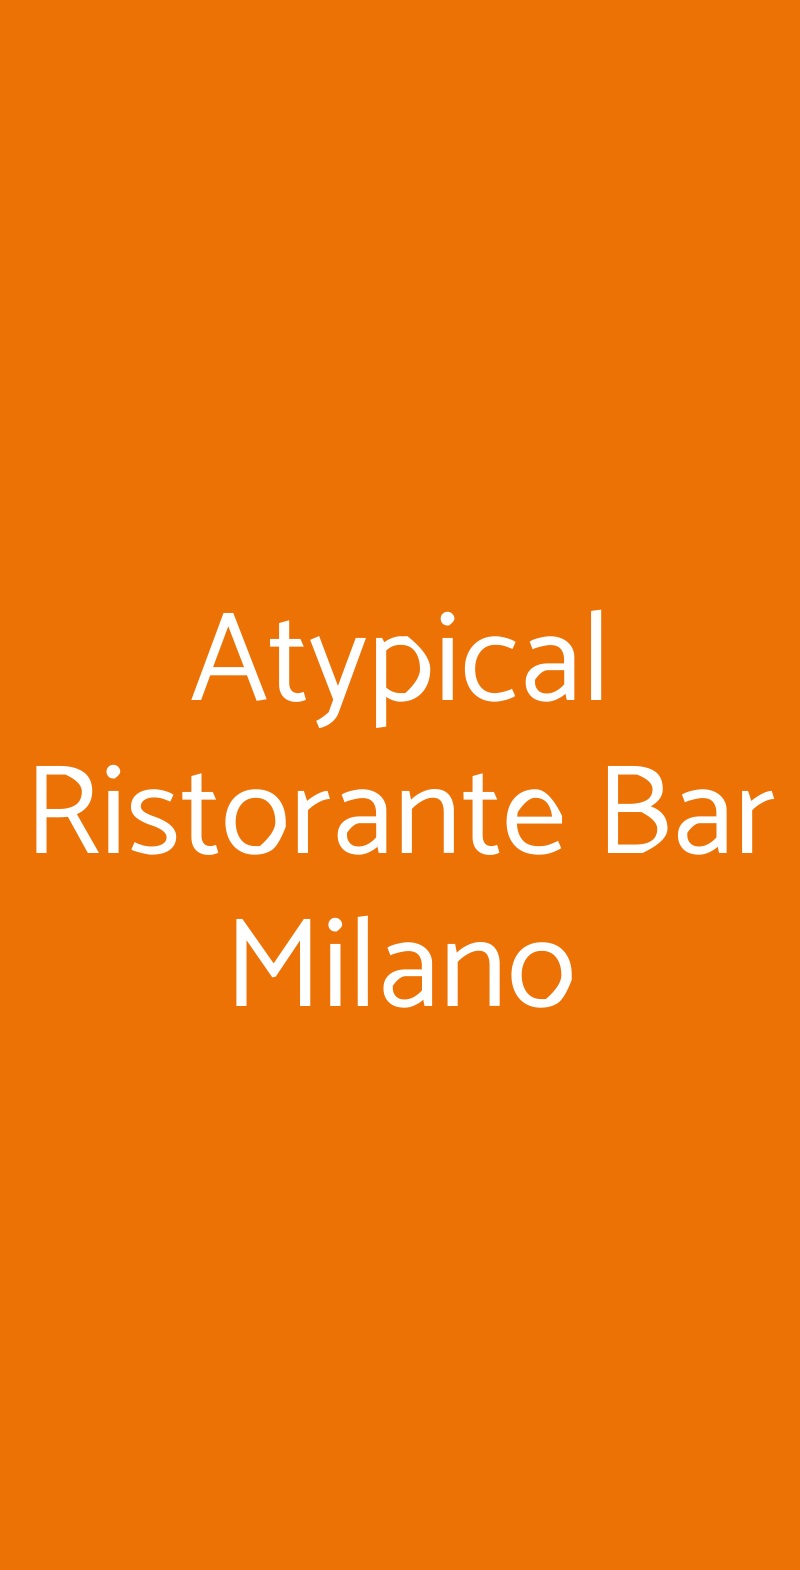 Atypical Ristorante Bar Milano Milano menù 1 pagina